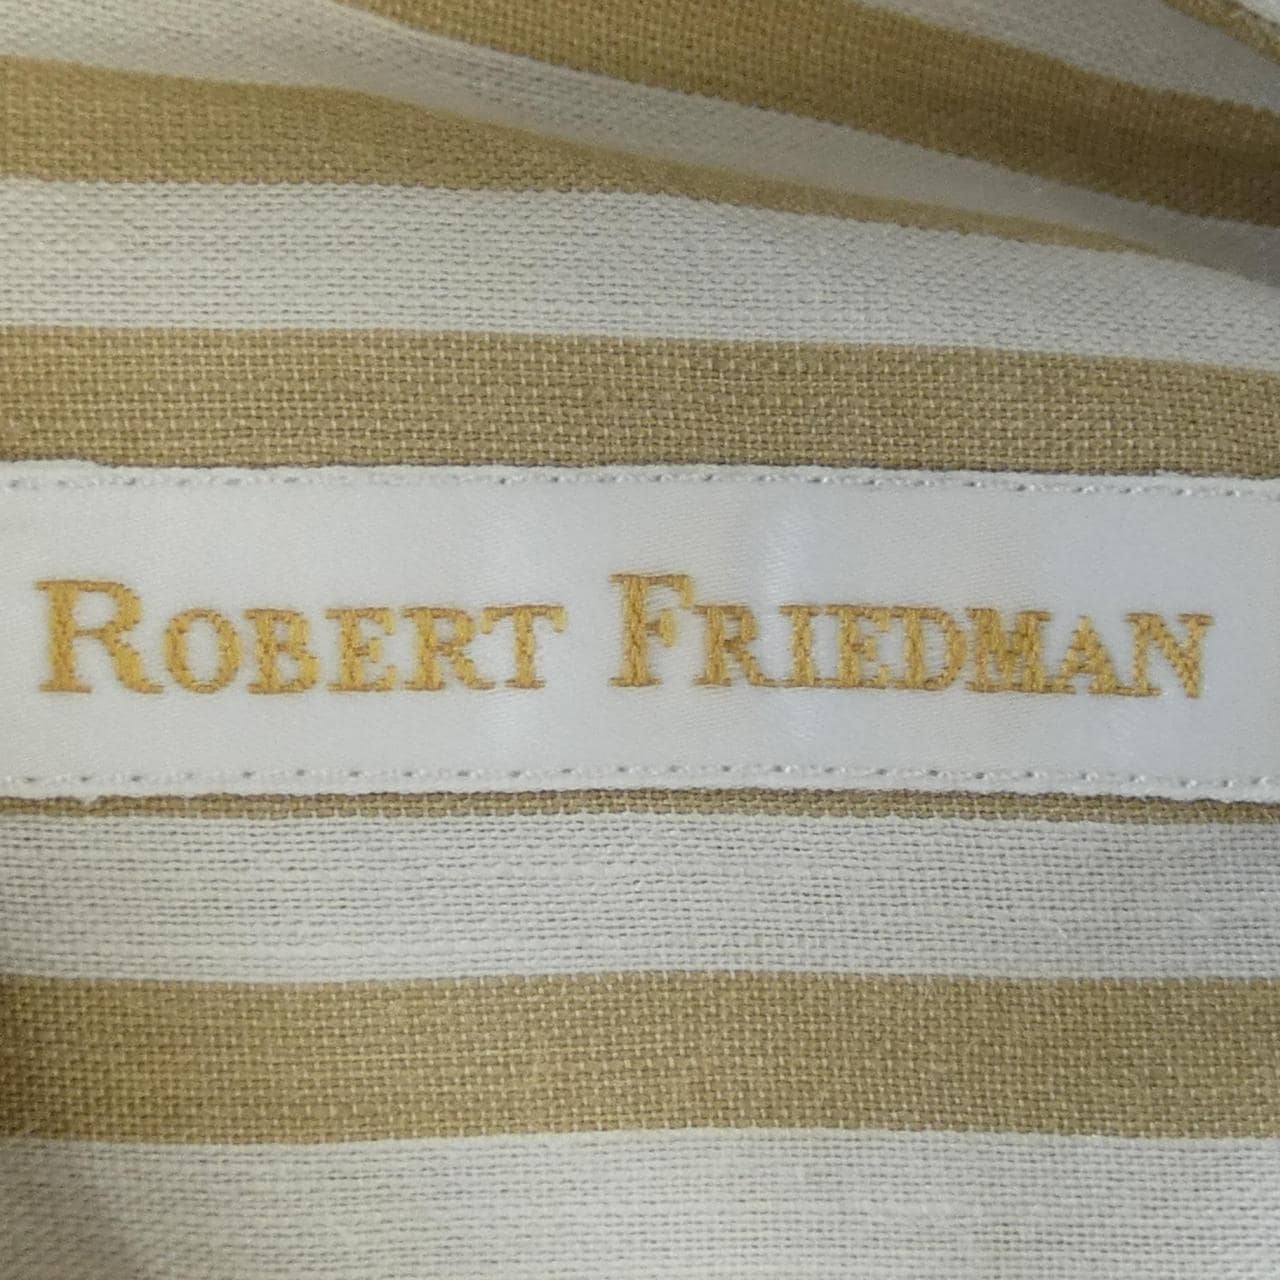 ROBERT FRIEDAN衬衫